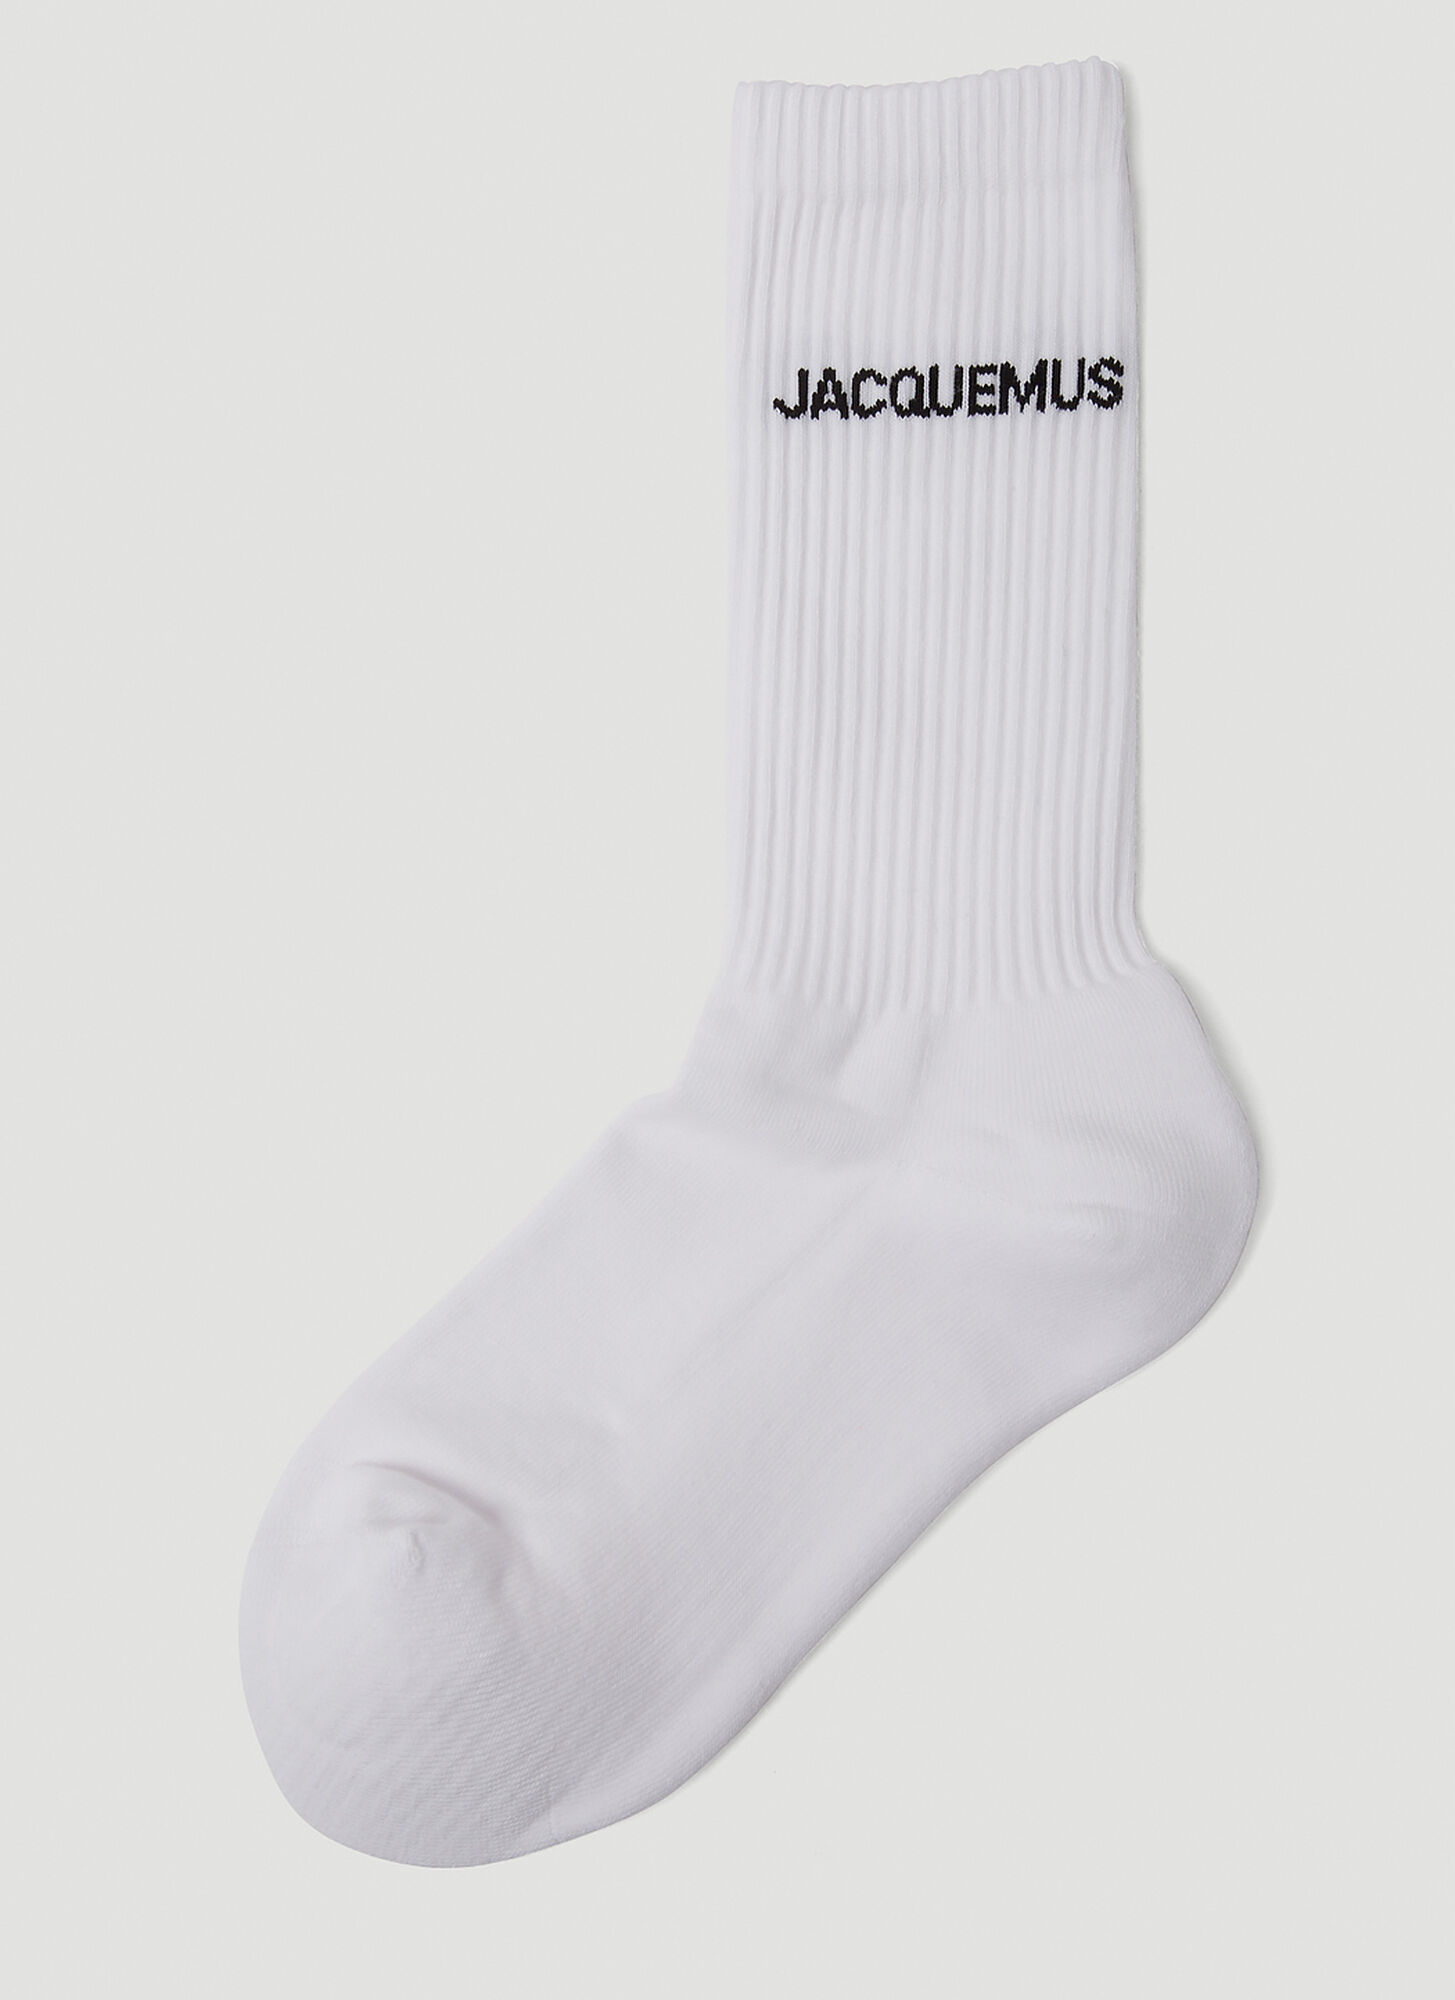 Jacquemus Les Chaussettes Socks In White